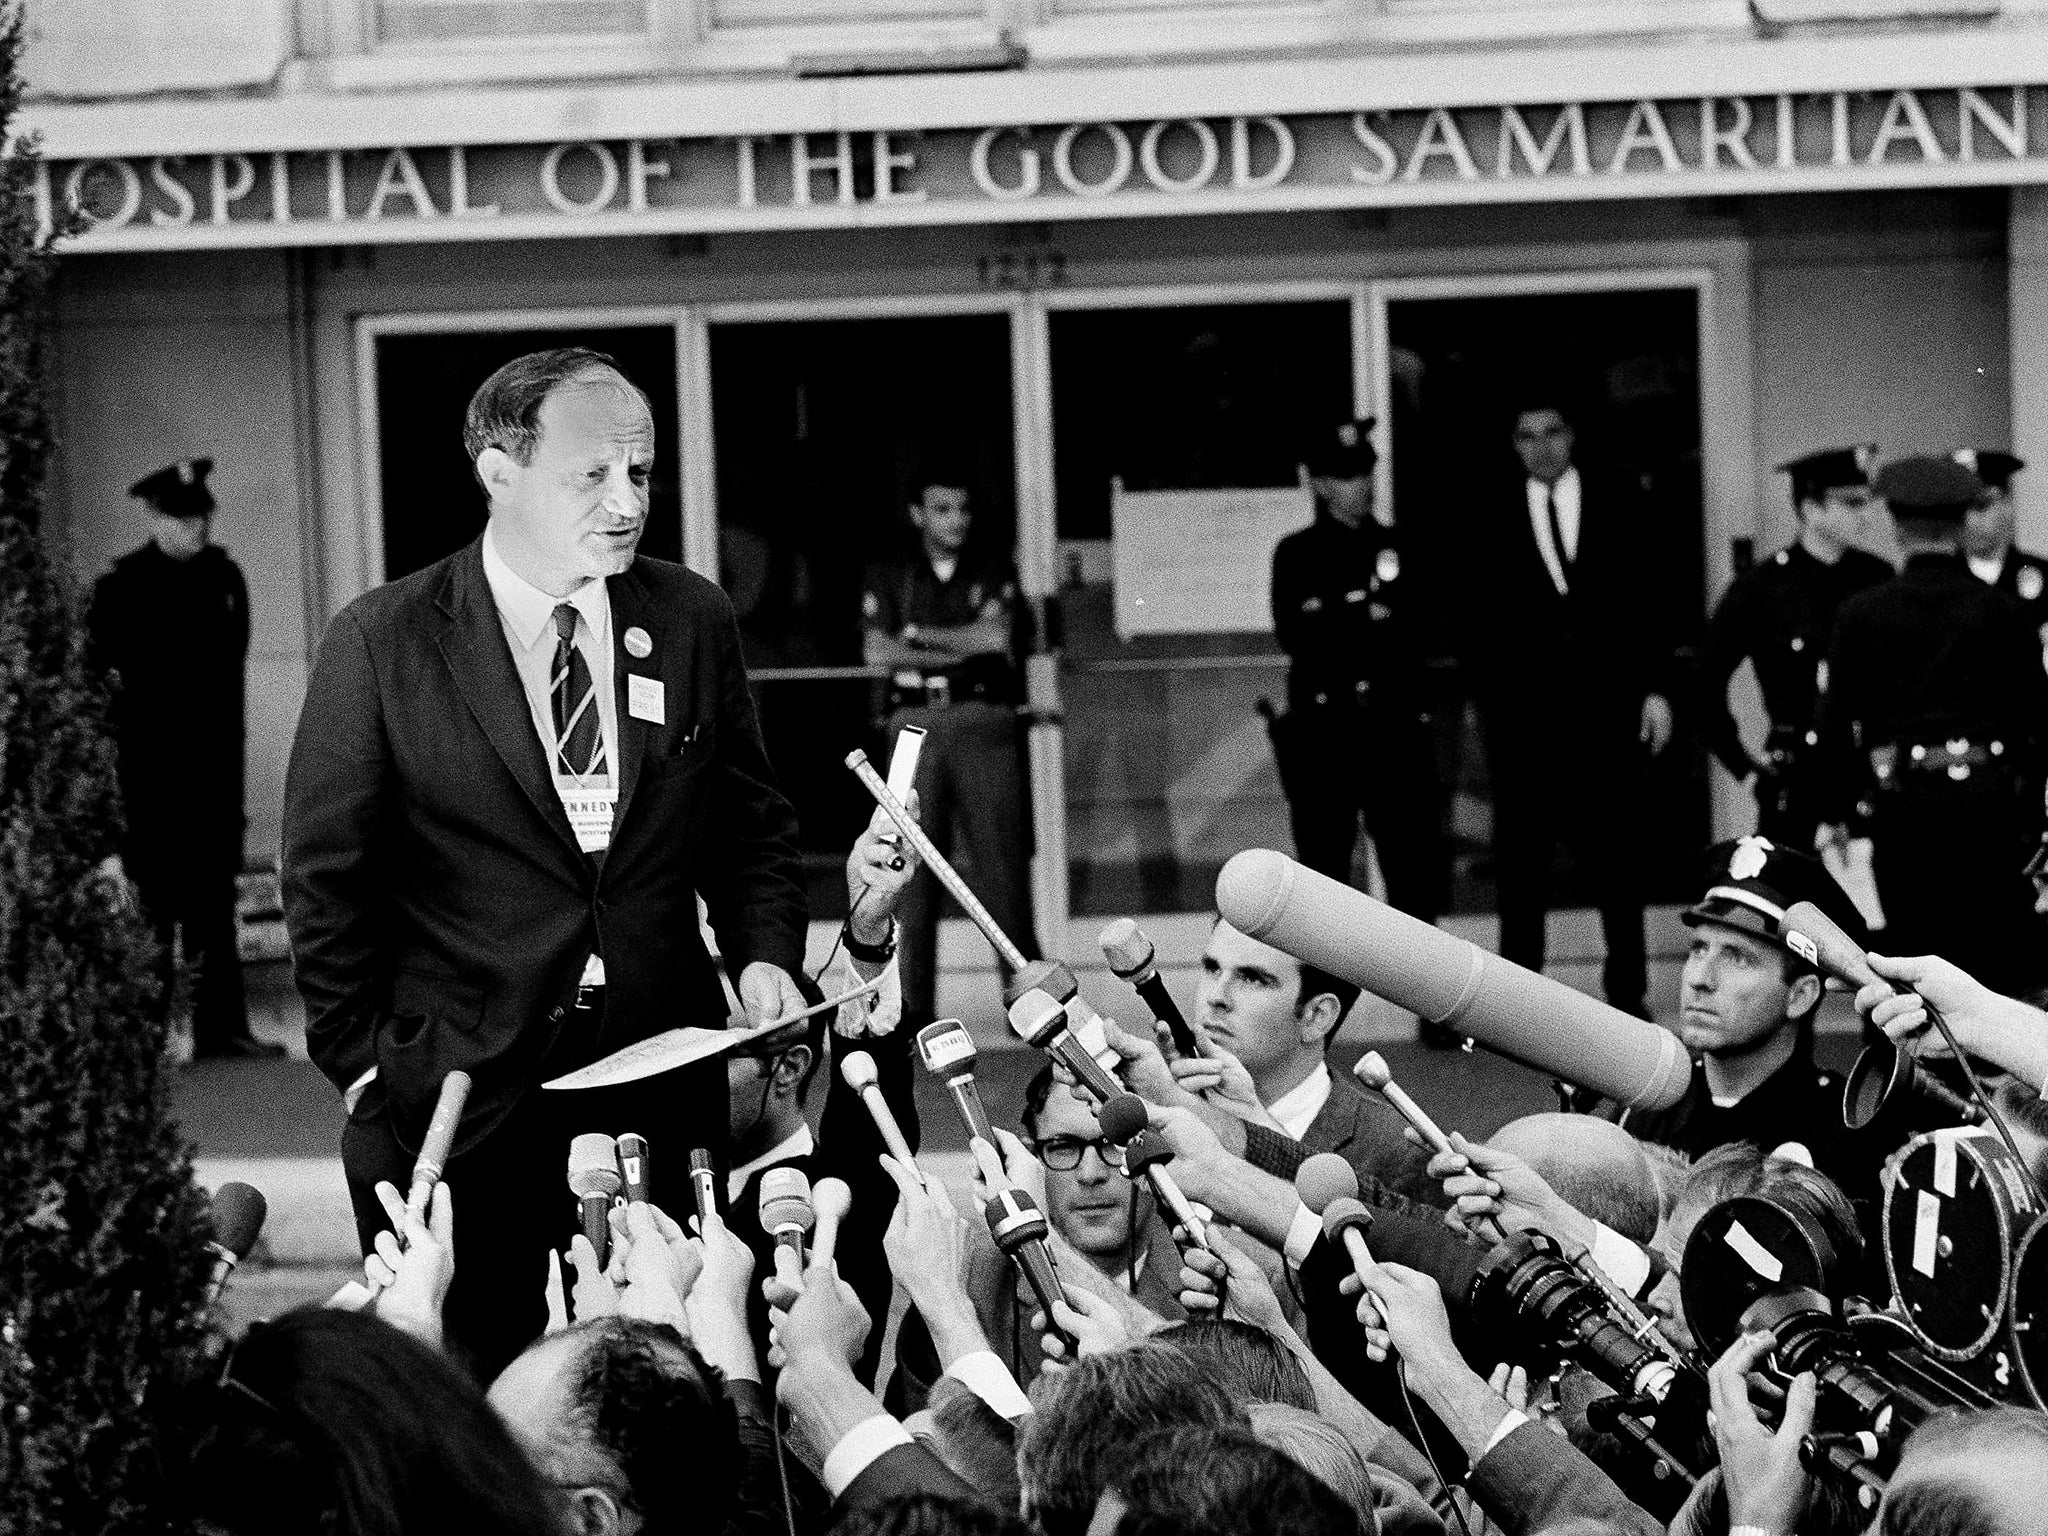 Mankiewicz addresses the press outside the Good Samaritan hospital in Los Angeles on 5 June 1968